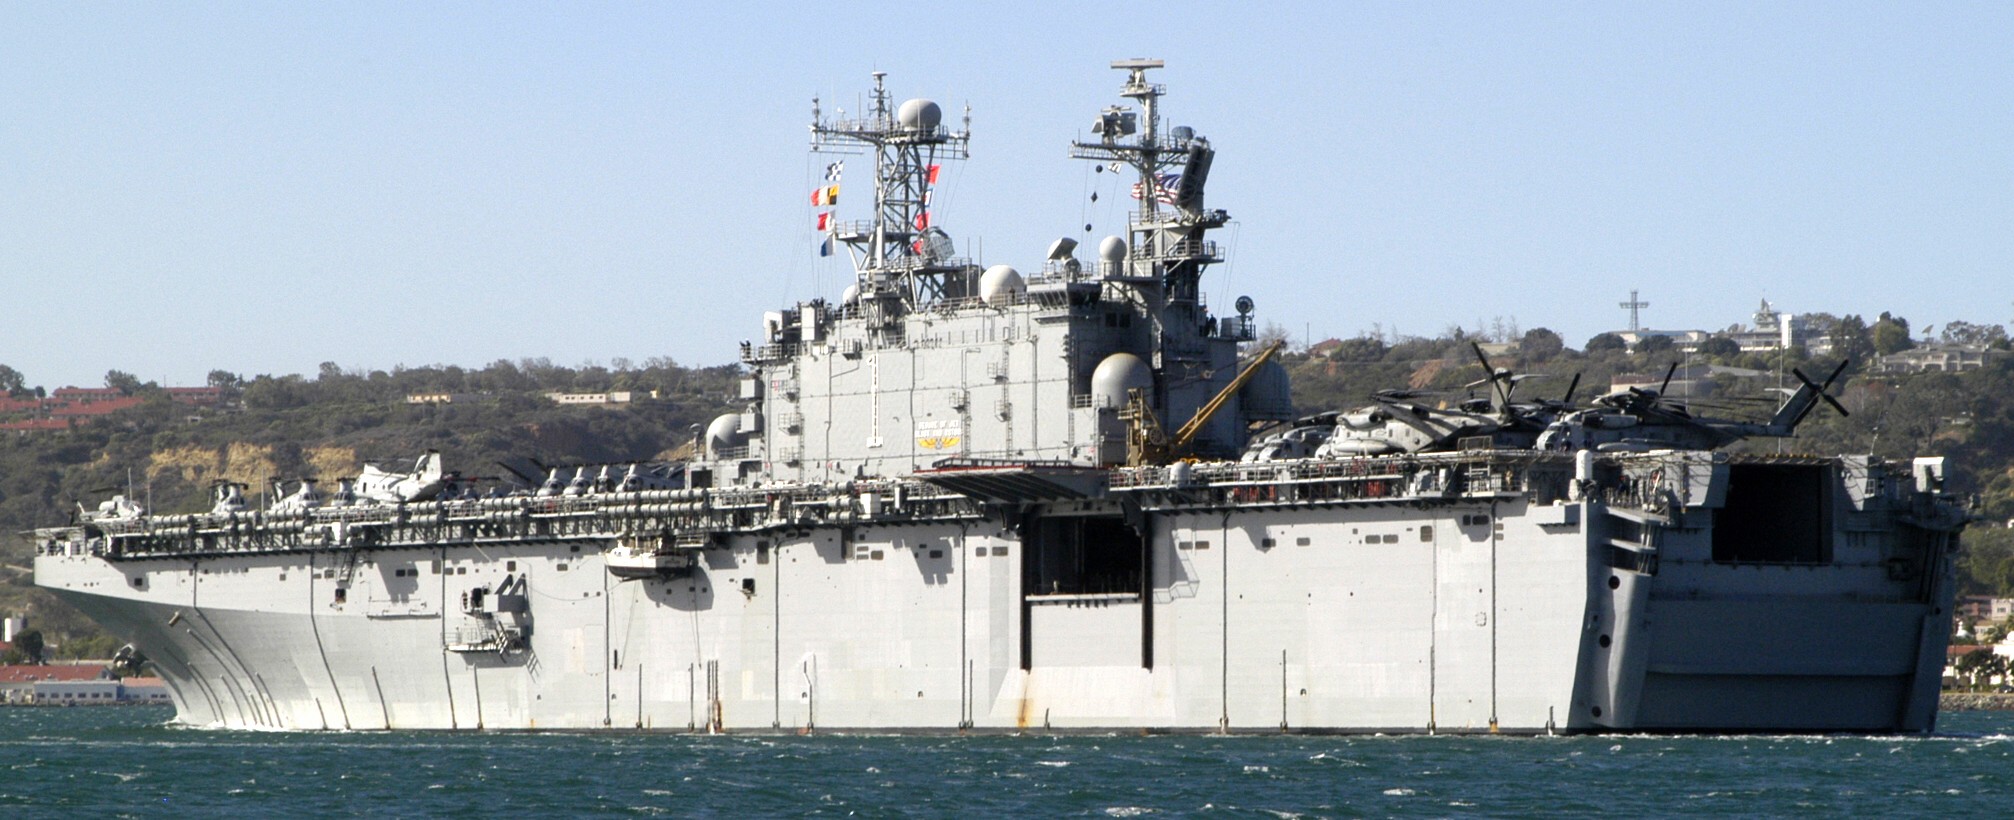 lha-1 uss tarawa amphibious assault ship us navy 15th meu soc marines hmm-161 rein rimpac 02 16